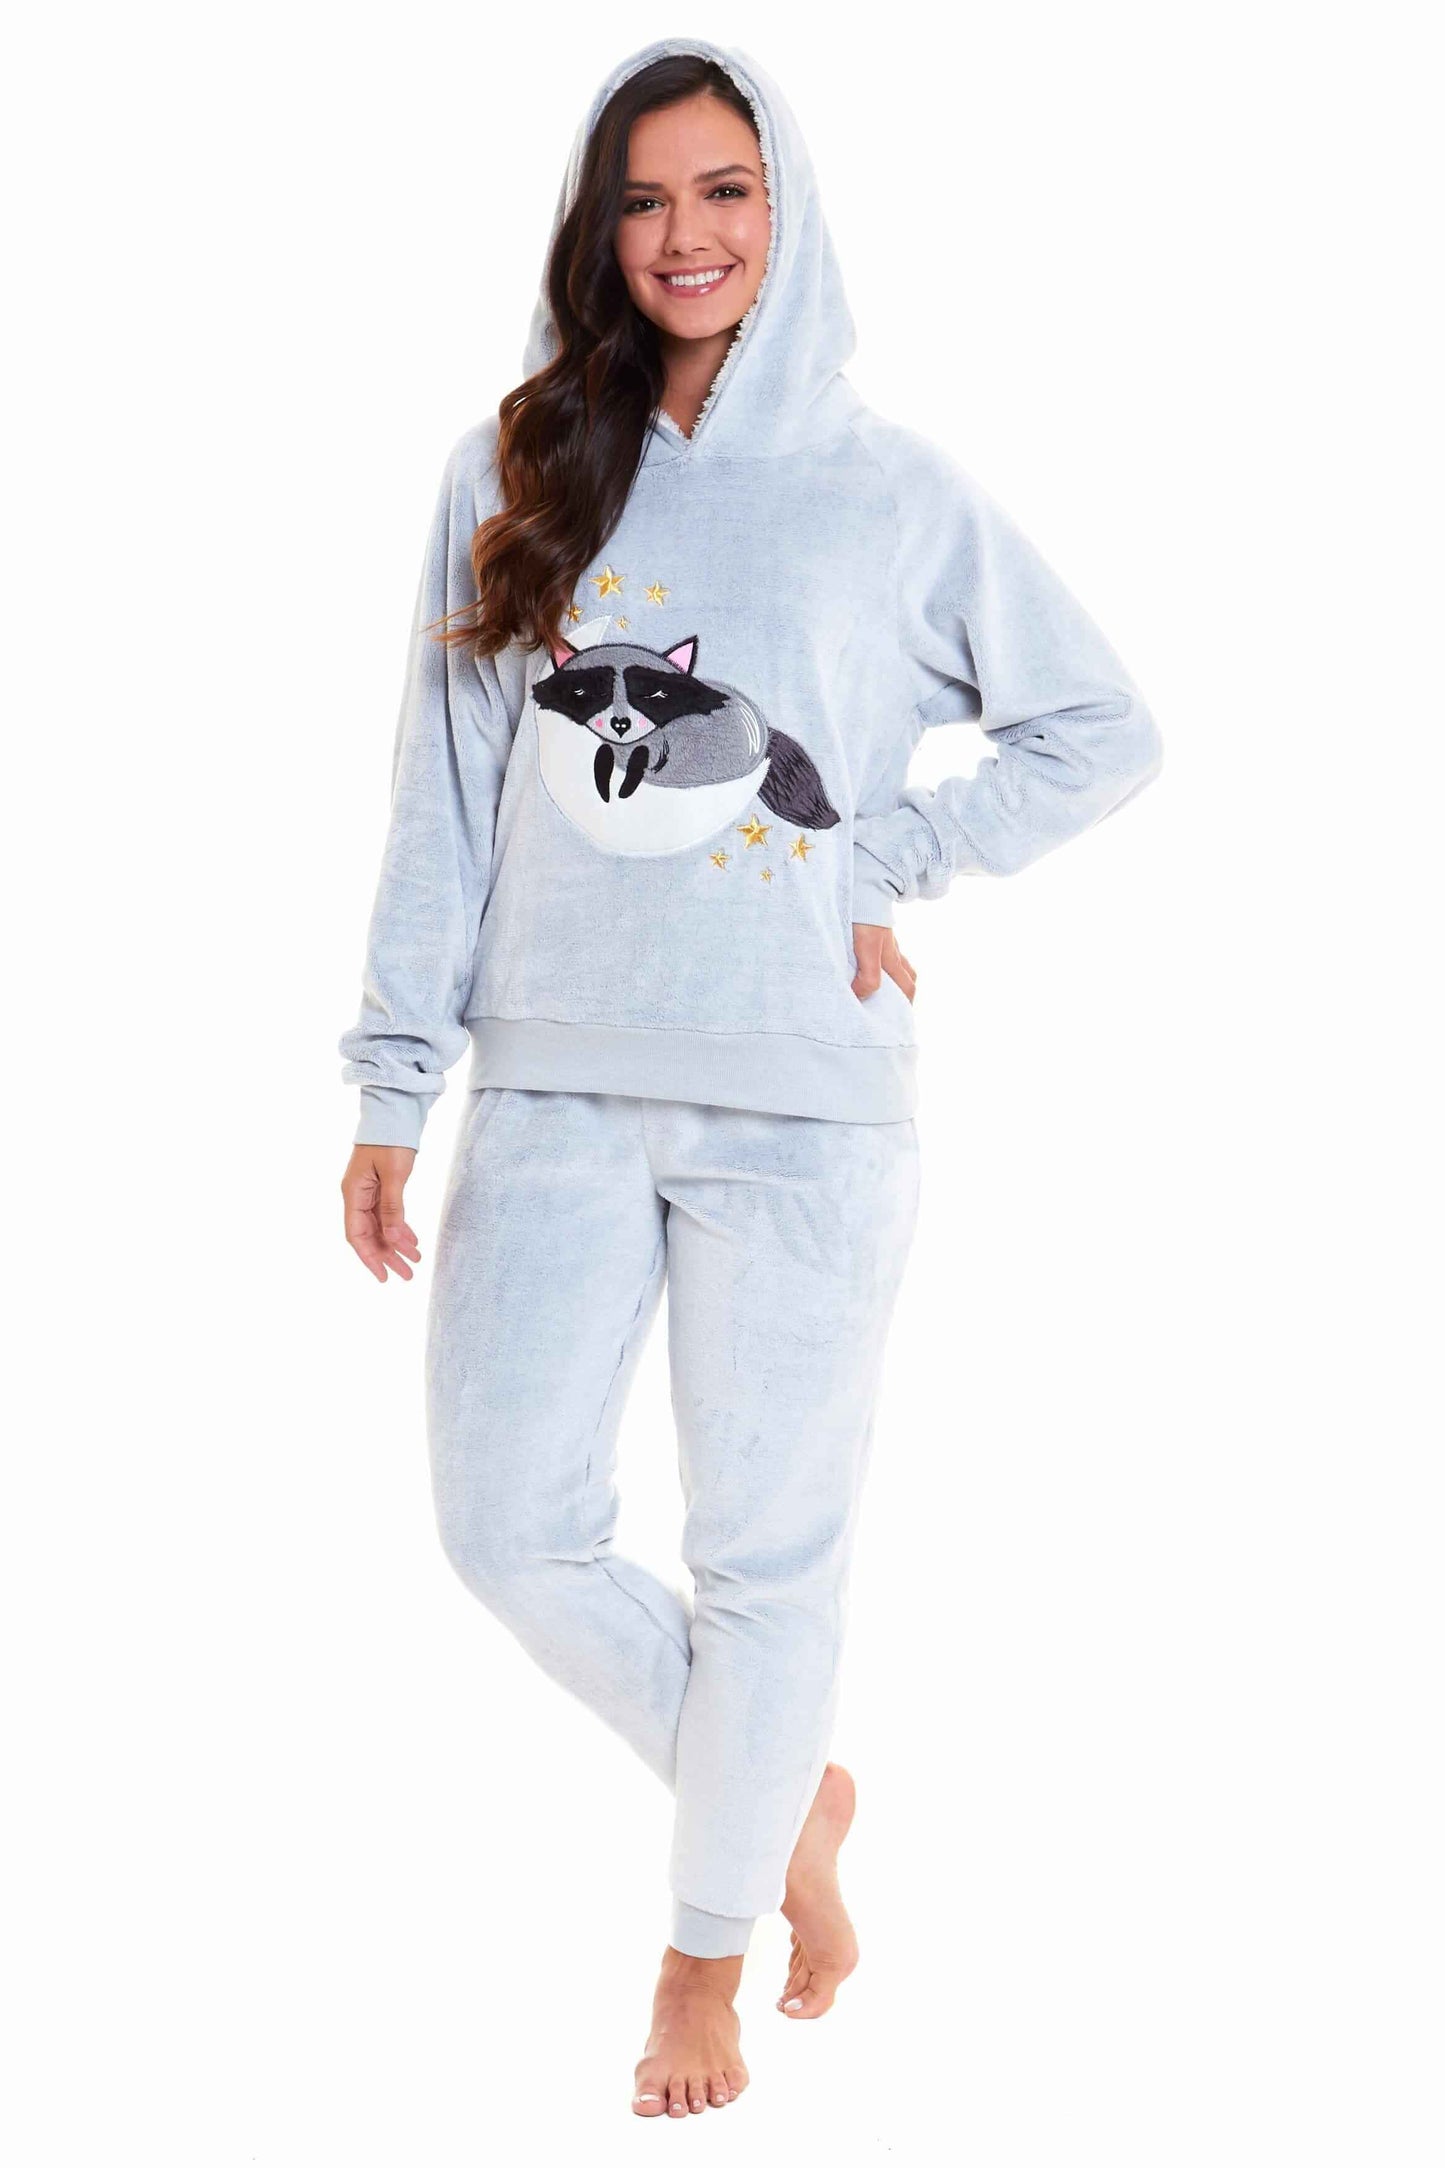 Raccoon Plush Fleece Hooded Pyjama Set, Twosie Pyjama Mother & Daughter Matching Loungewear. Buy now for £20.00. A Pyjamas by Daisy Dreamer. 12-14, 16-18, 20-22, 8-10, animal, bridesmaid, charcoal, childrens, flannel, fleece, girl, grey, gym, hooded, hote